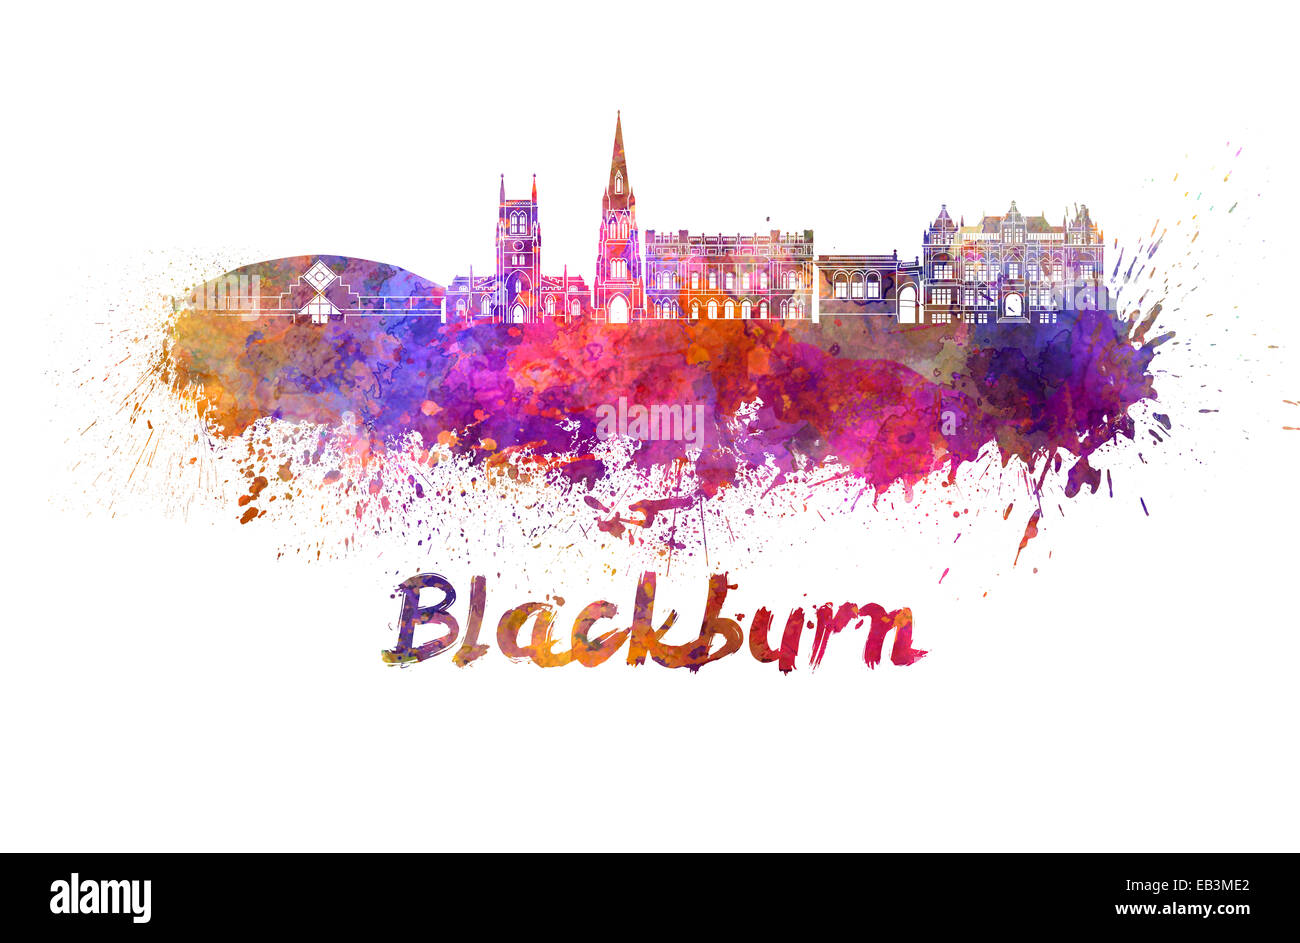 Blackburn skyline in watercolor splatters Stock Photo